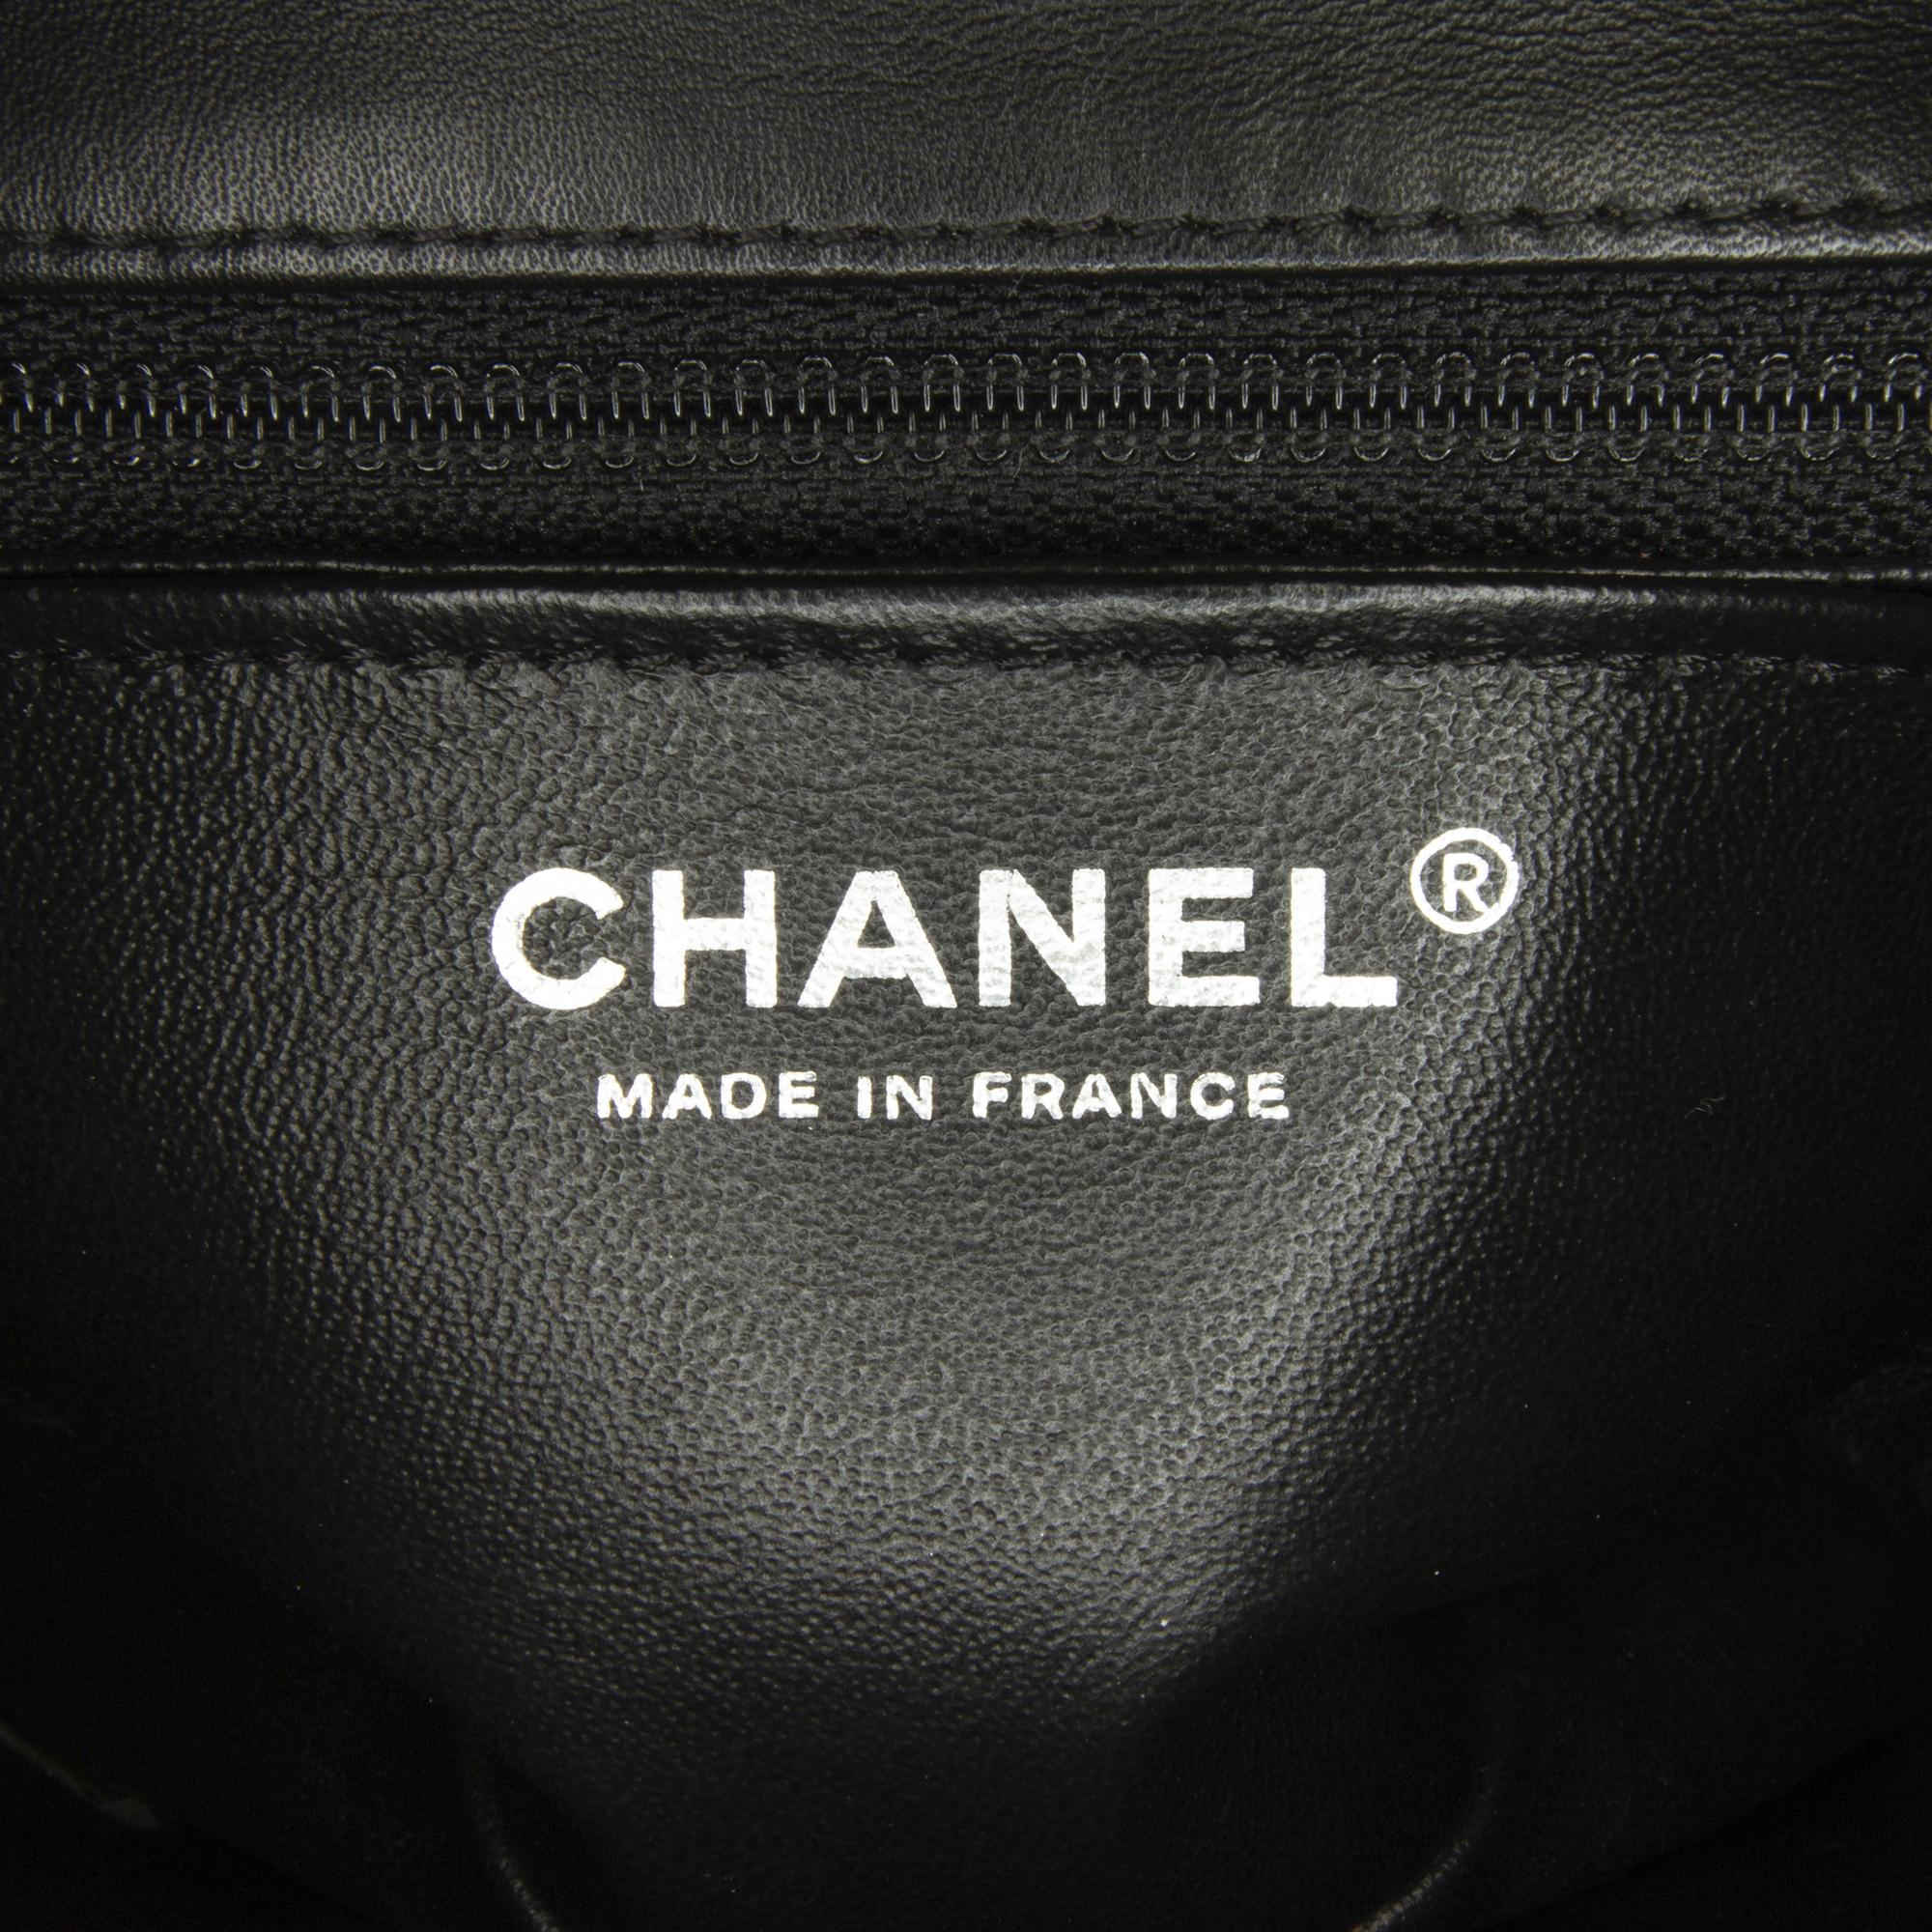 Chanel Black Mini Classic Square Patent Single Flap